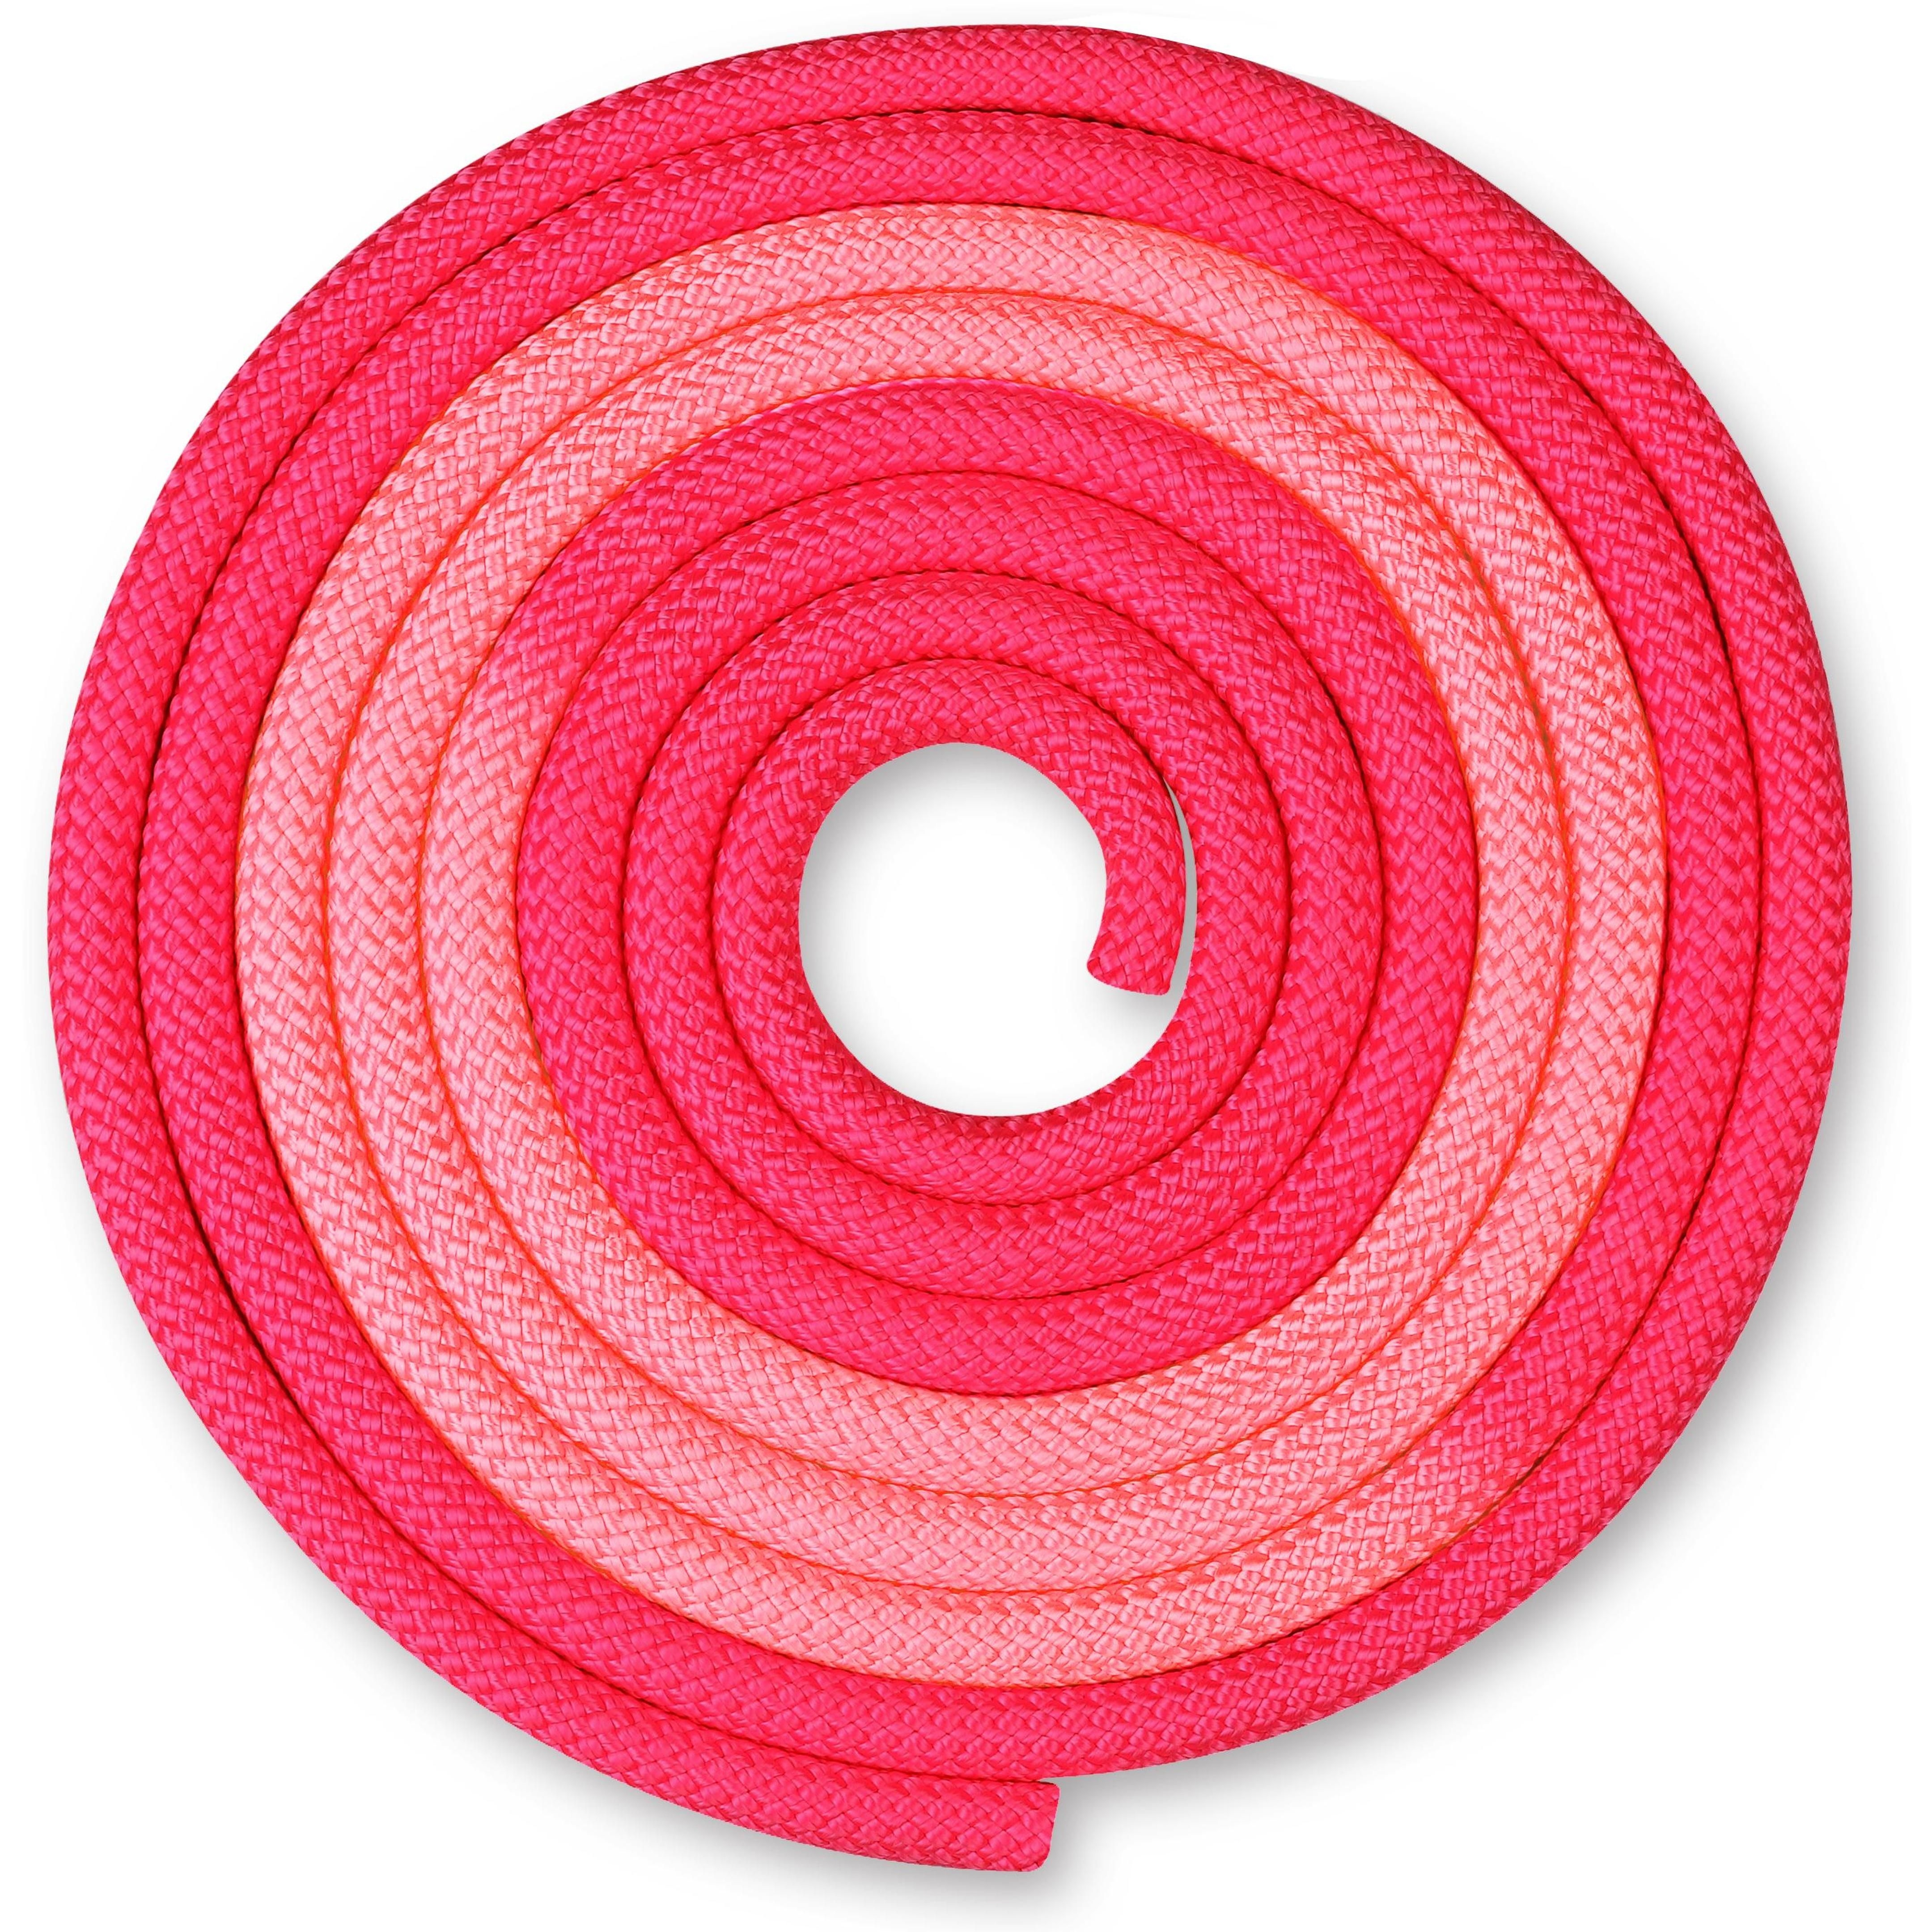 Cuerda para Gimnasia Rítmica Ponderada 165g INDIGO Bicolor 3 m Fucsia- Rosa